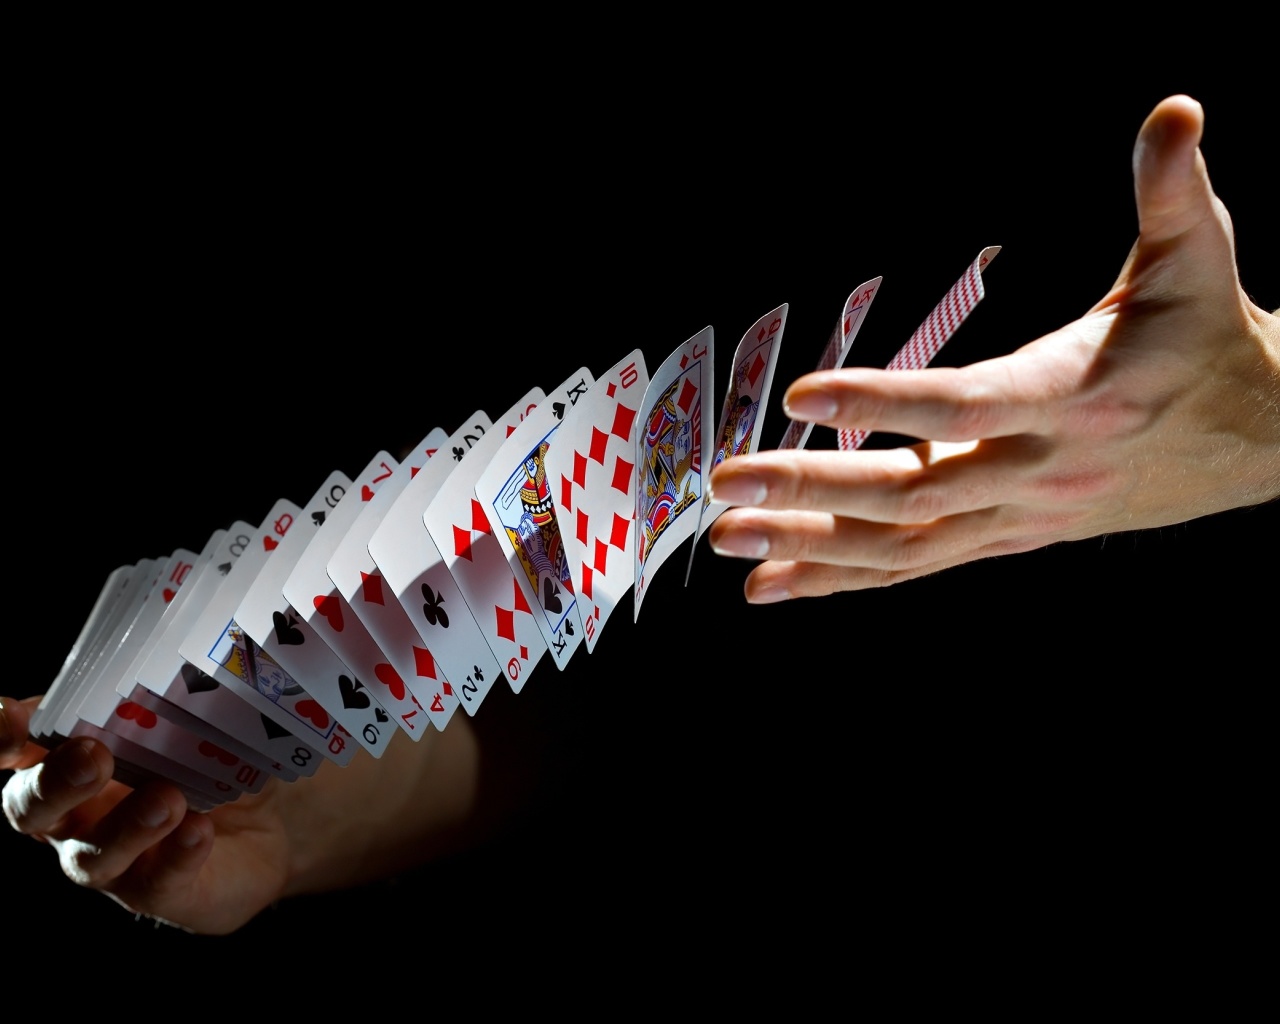 Das Playing cards trick Wallpaper 1280x1024